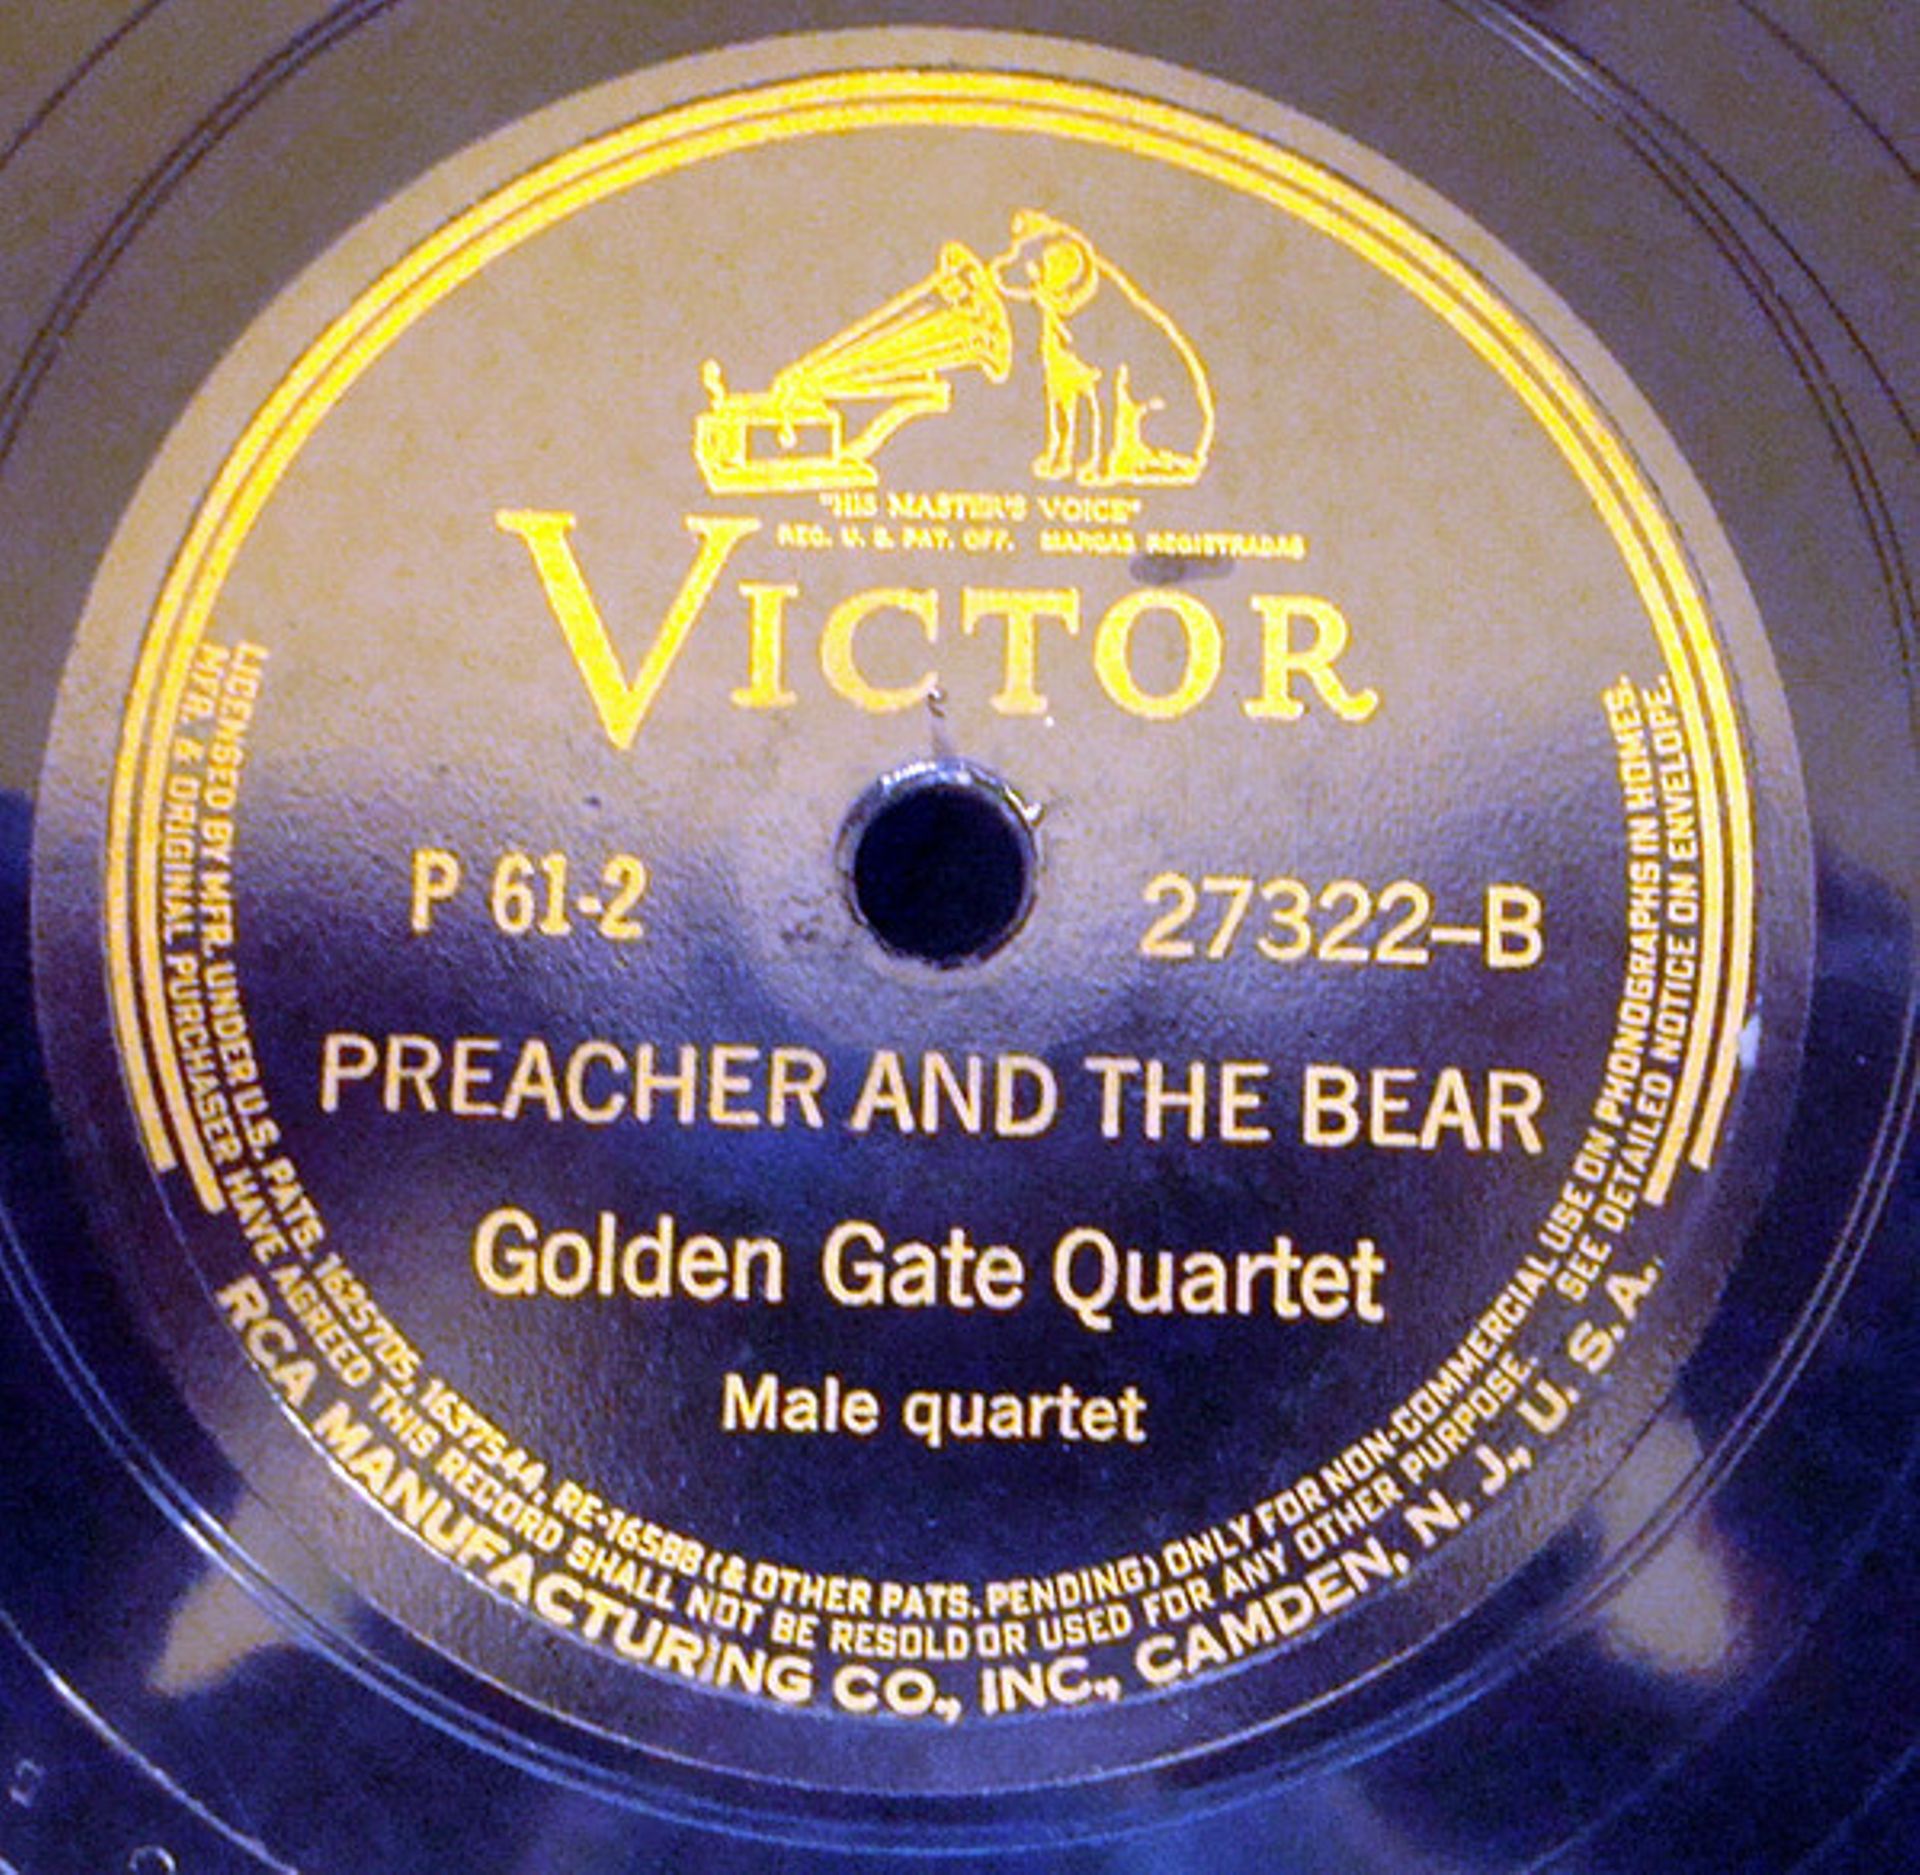 Face B Shellac 78T 27322-B Victor, Golden Gate Quartet, 'Preacher and the bear', 1937